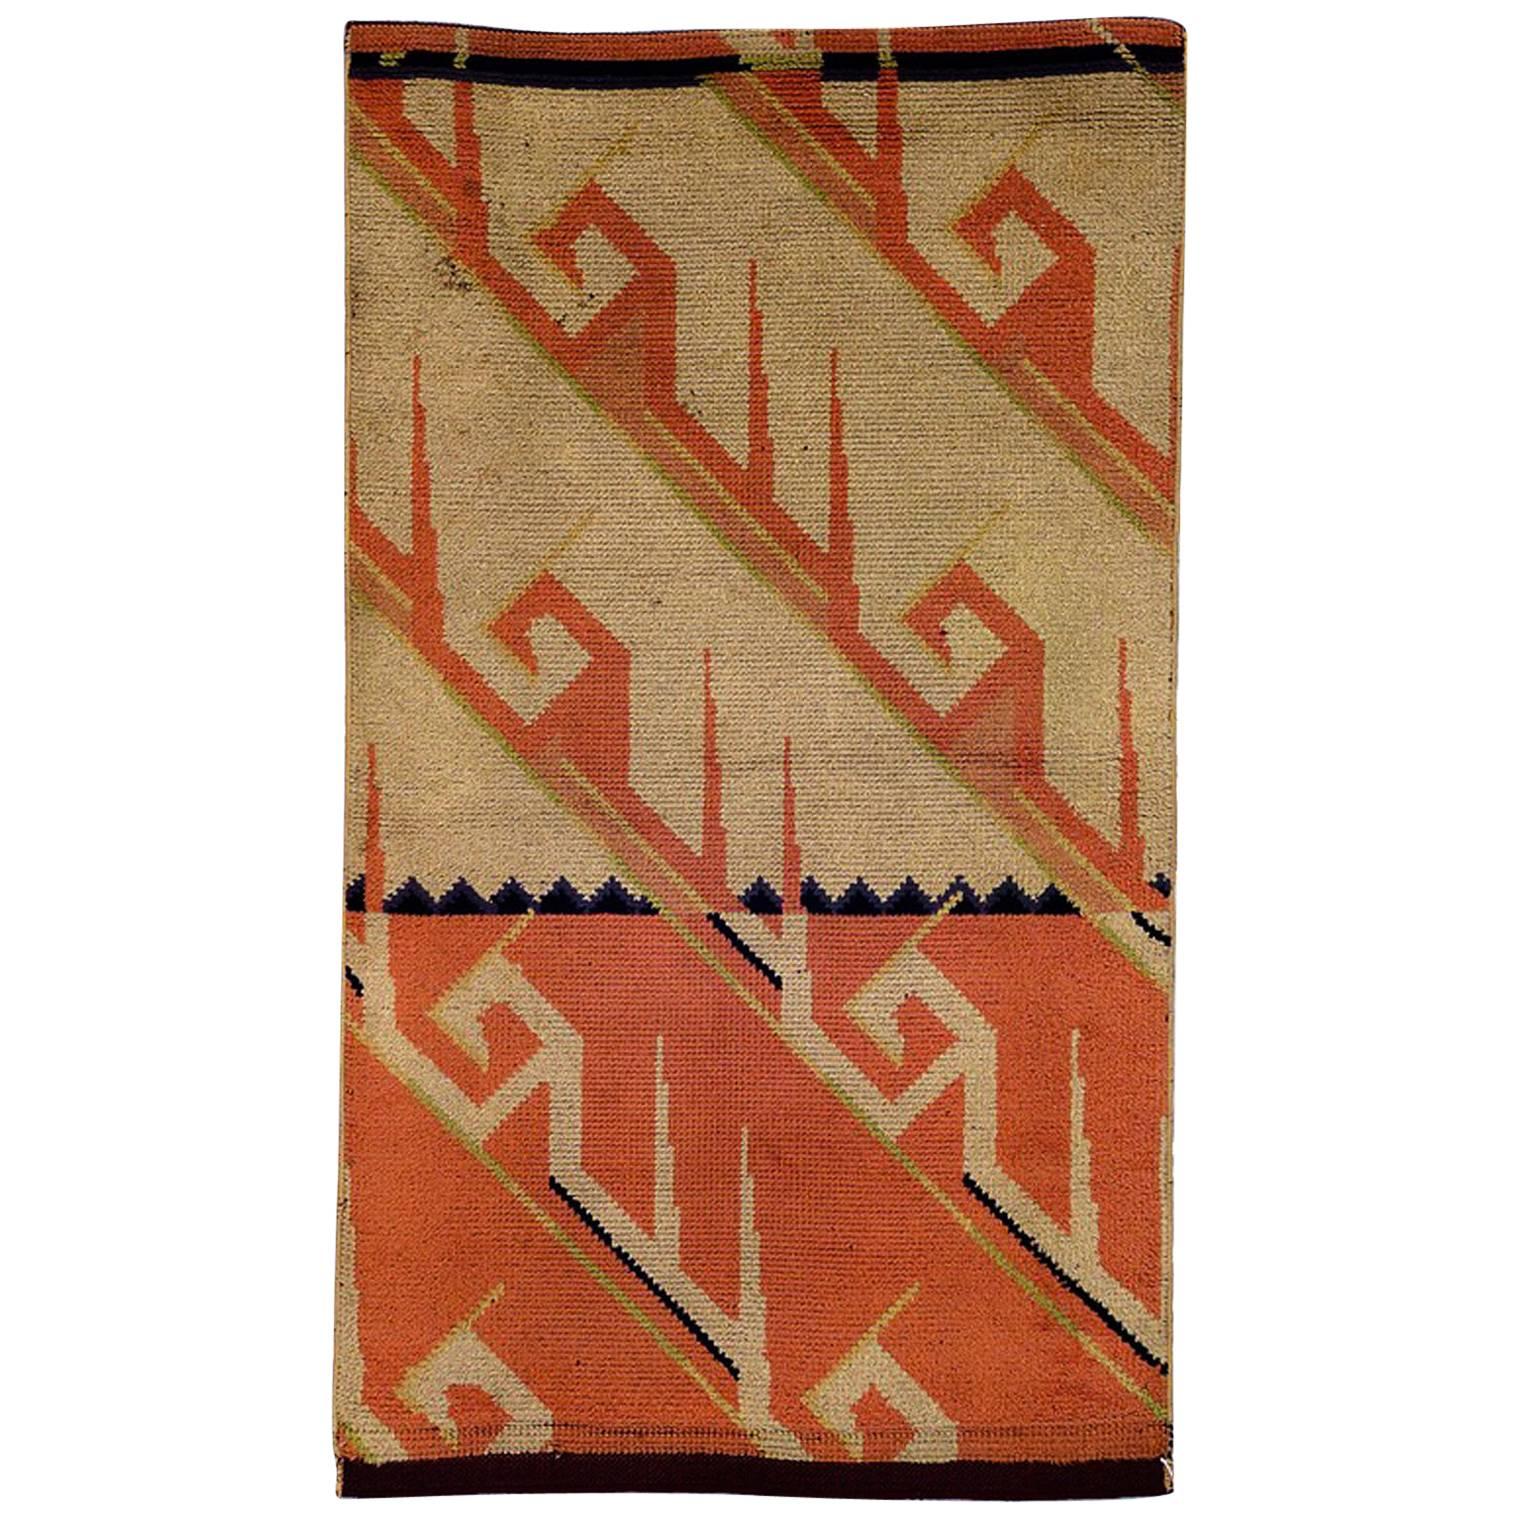 20th Century Orange White in Wool France European Art Deco Rug, 1920-1940